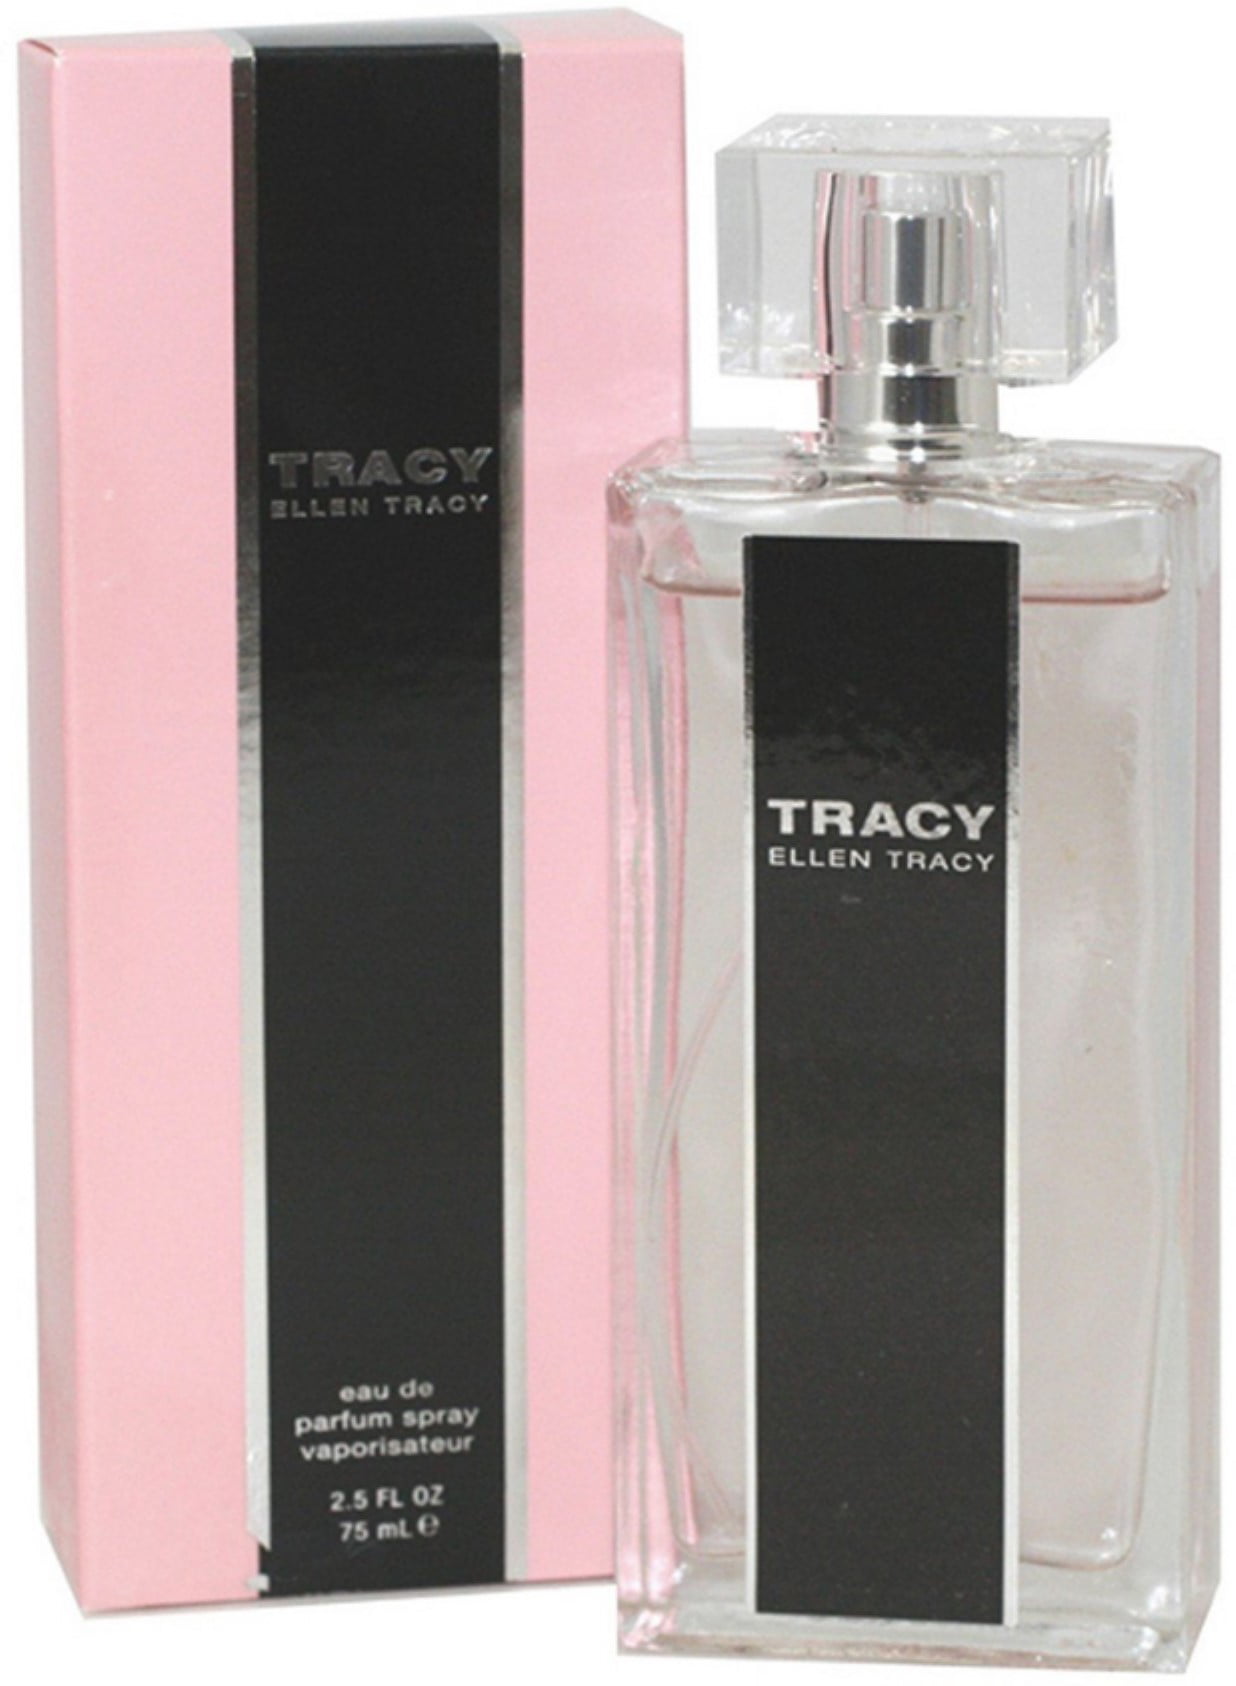 Tracy By Ellen Tracy For Women. Eau De Parfum Spray 2.5 oz - Walmart ...